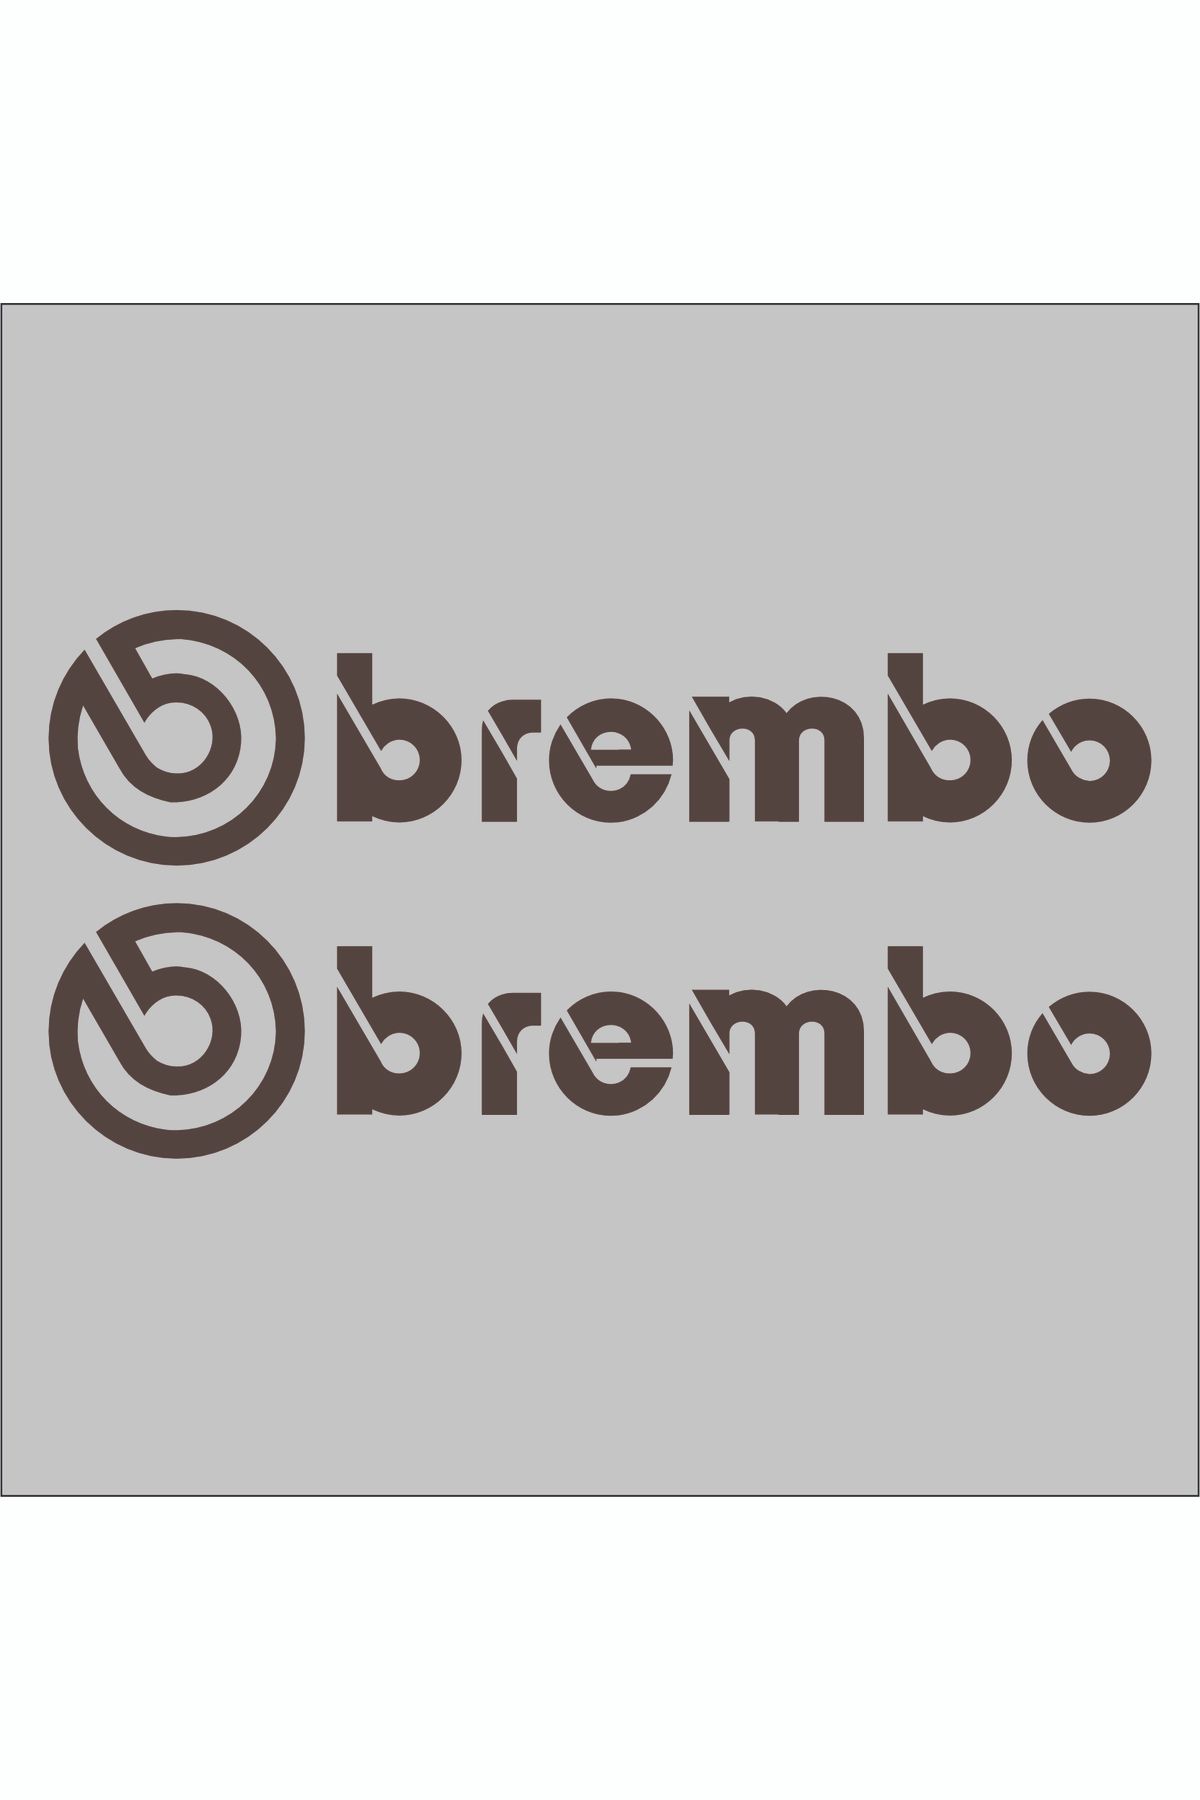 YAMANB Brembo  Sticker  Moto Sticker